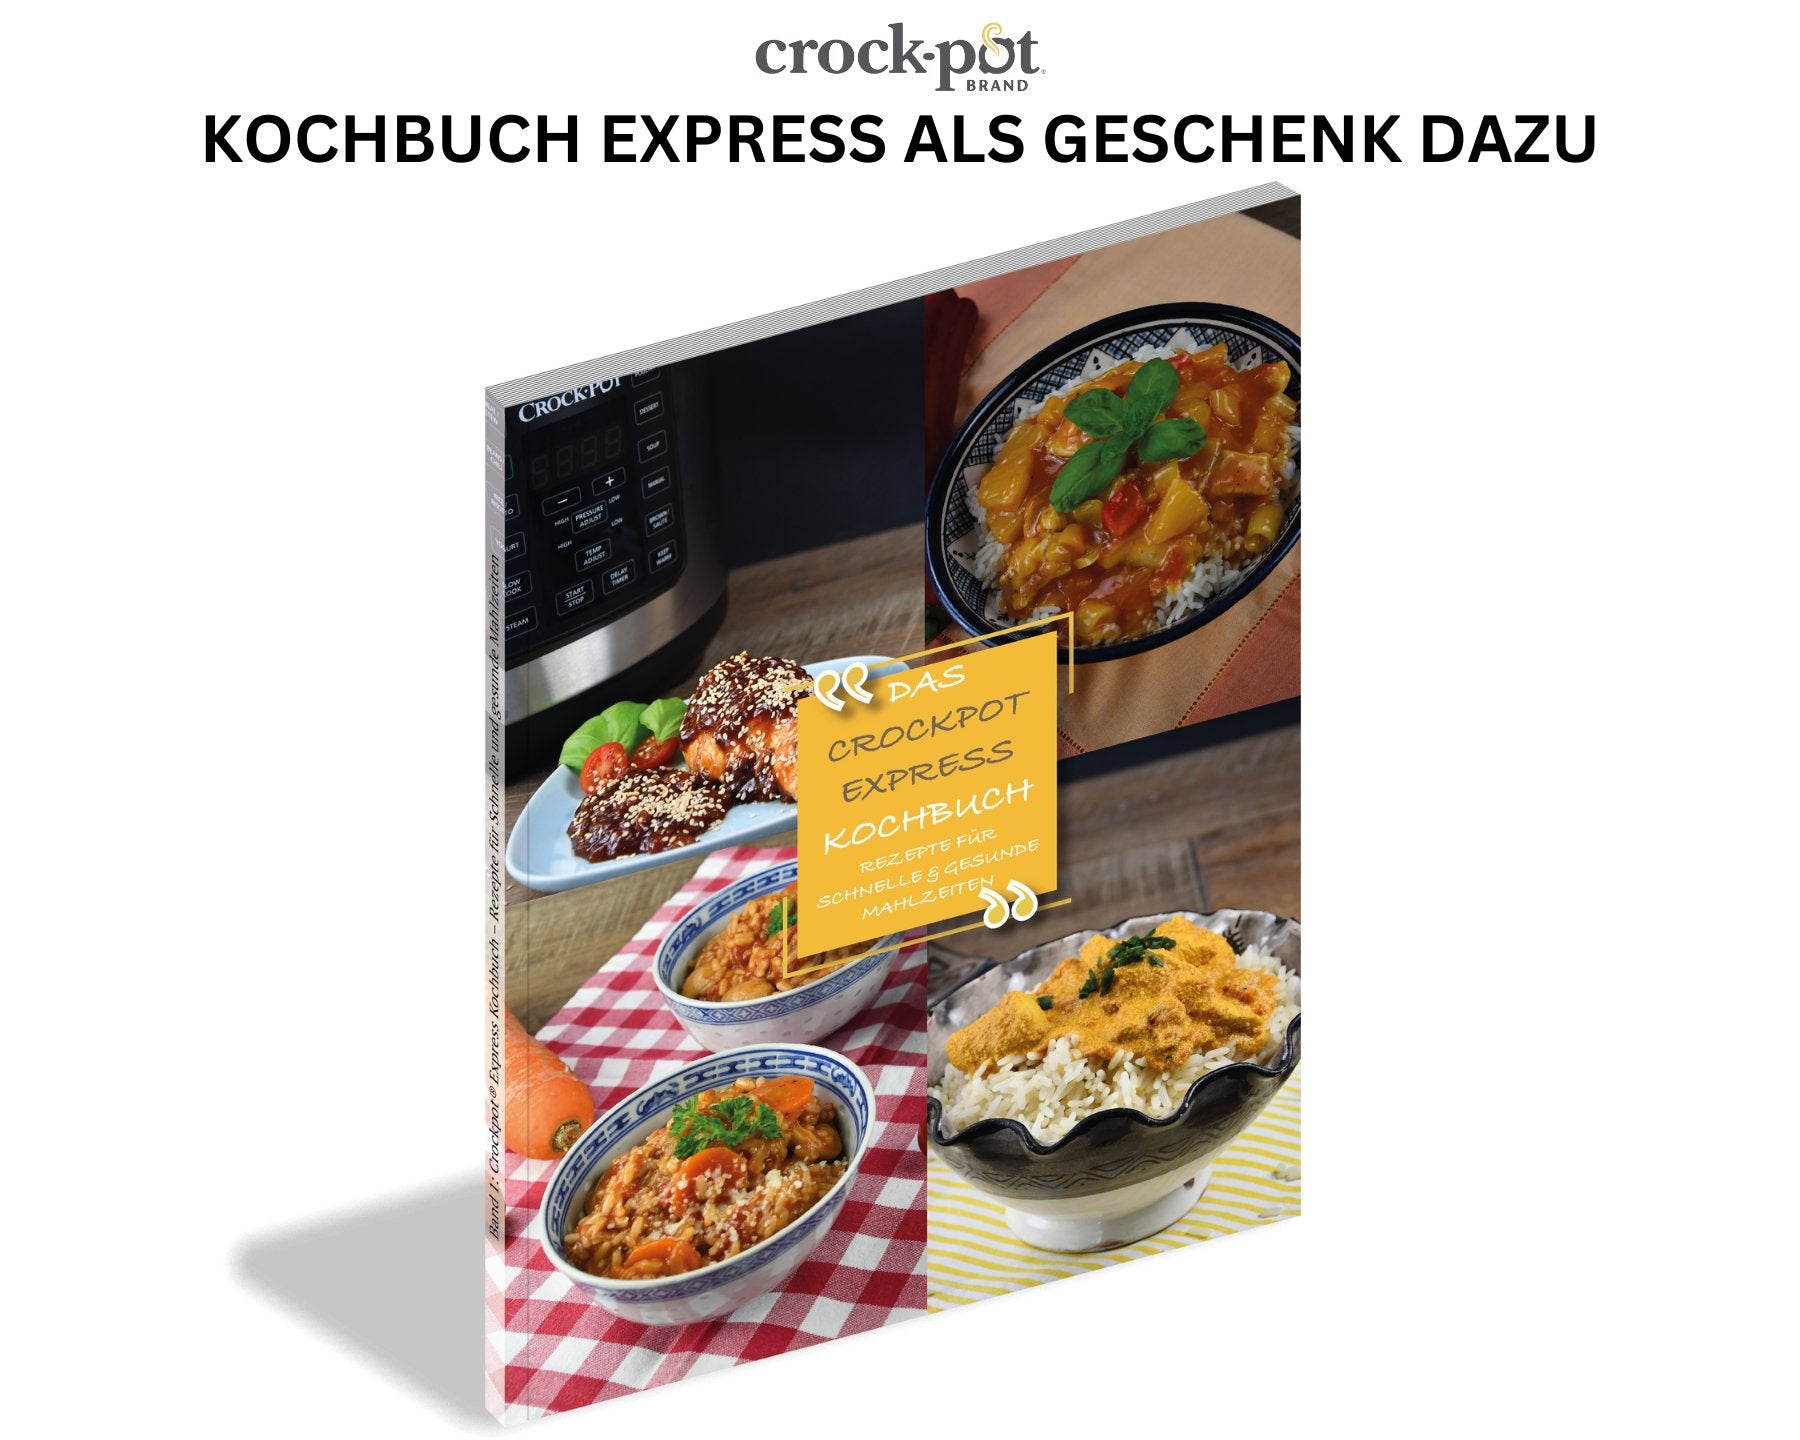 Crockpot Express, 5.6 L Multi-Cooker - kitchen-more.ch